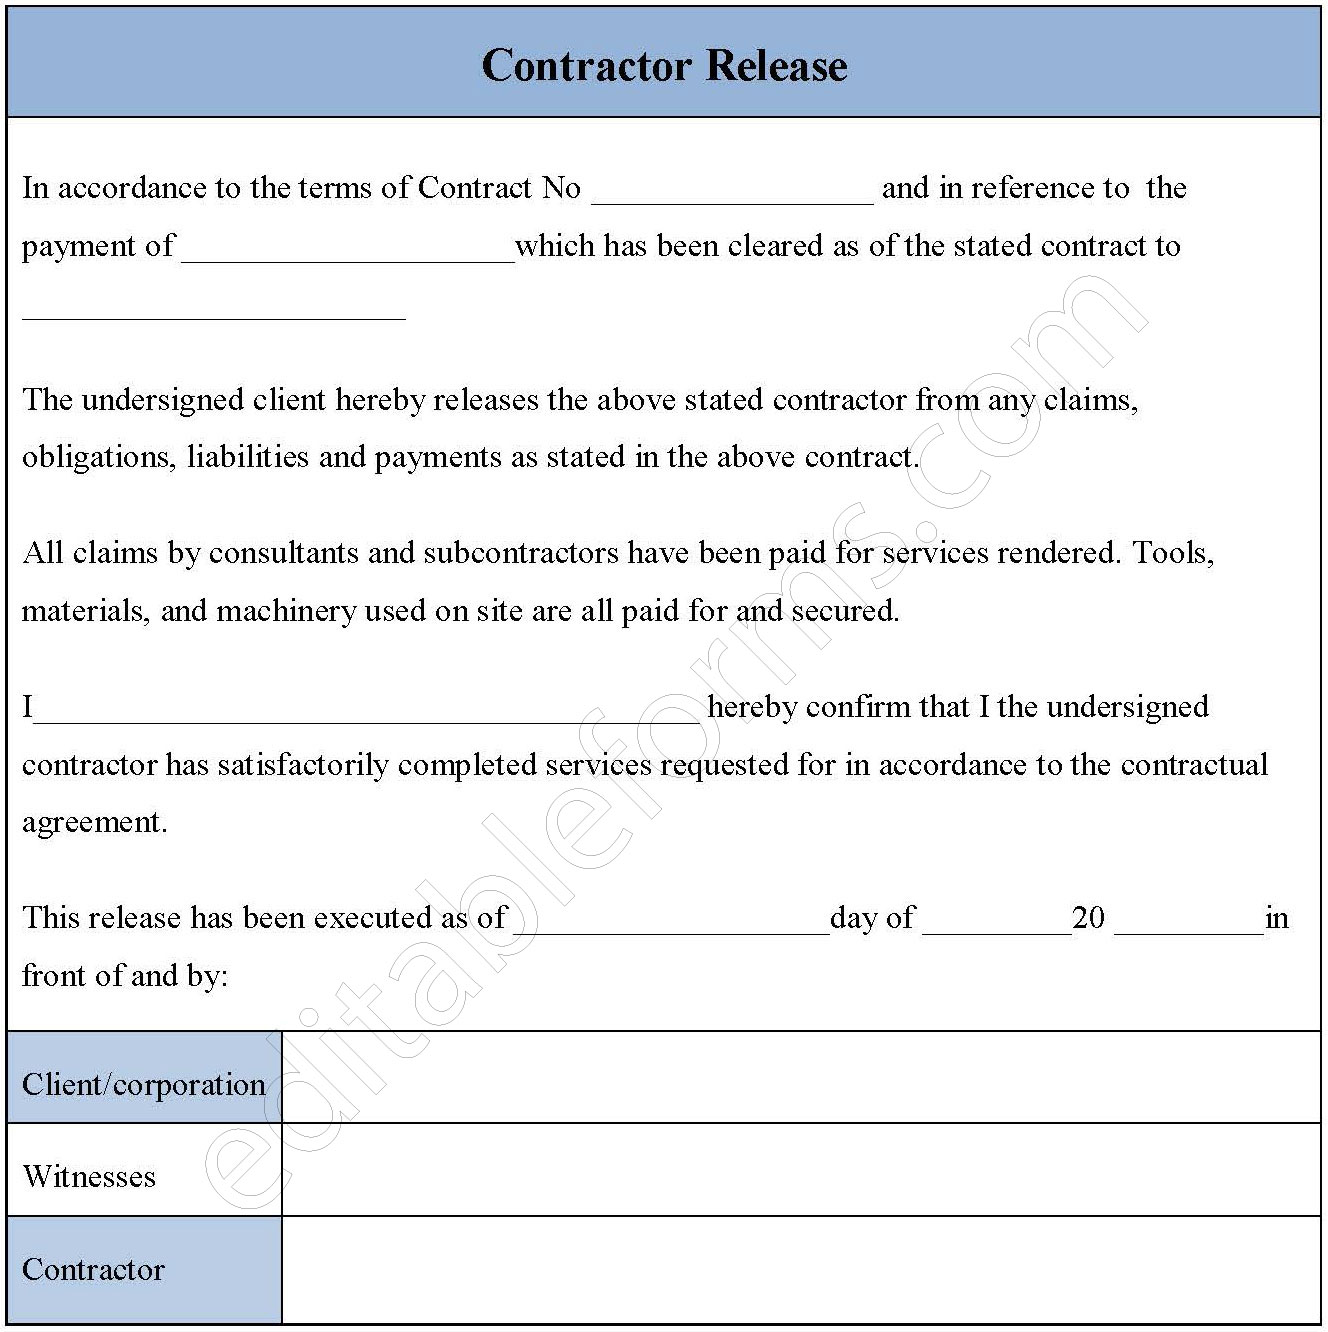 Contractor Release Form